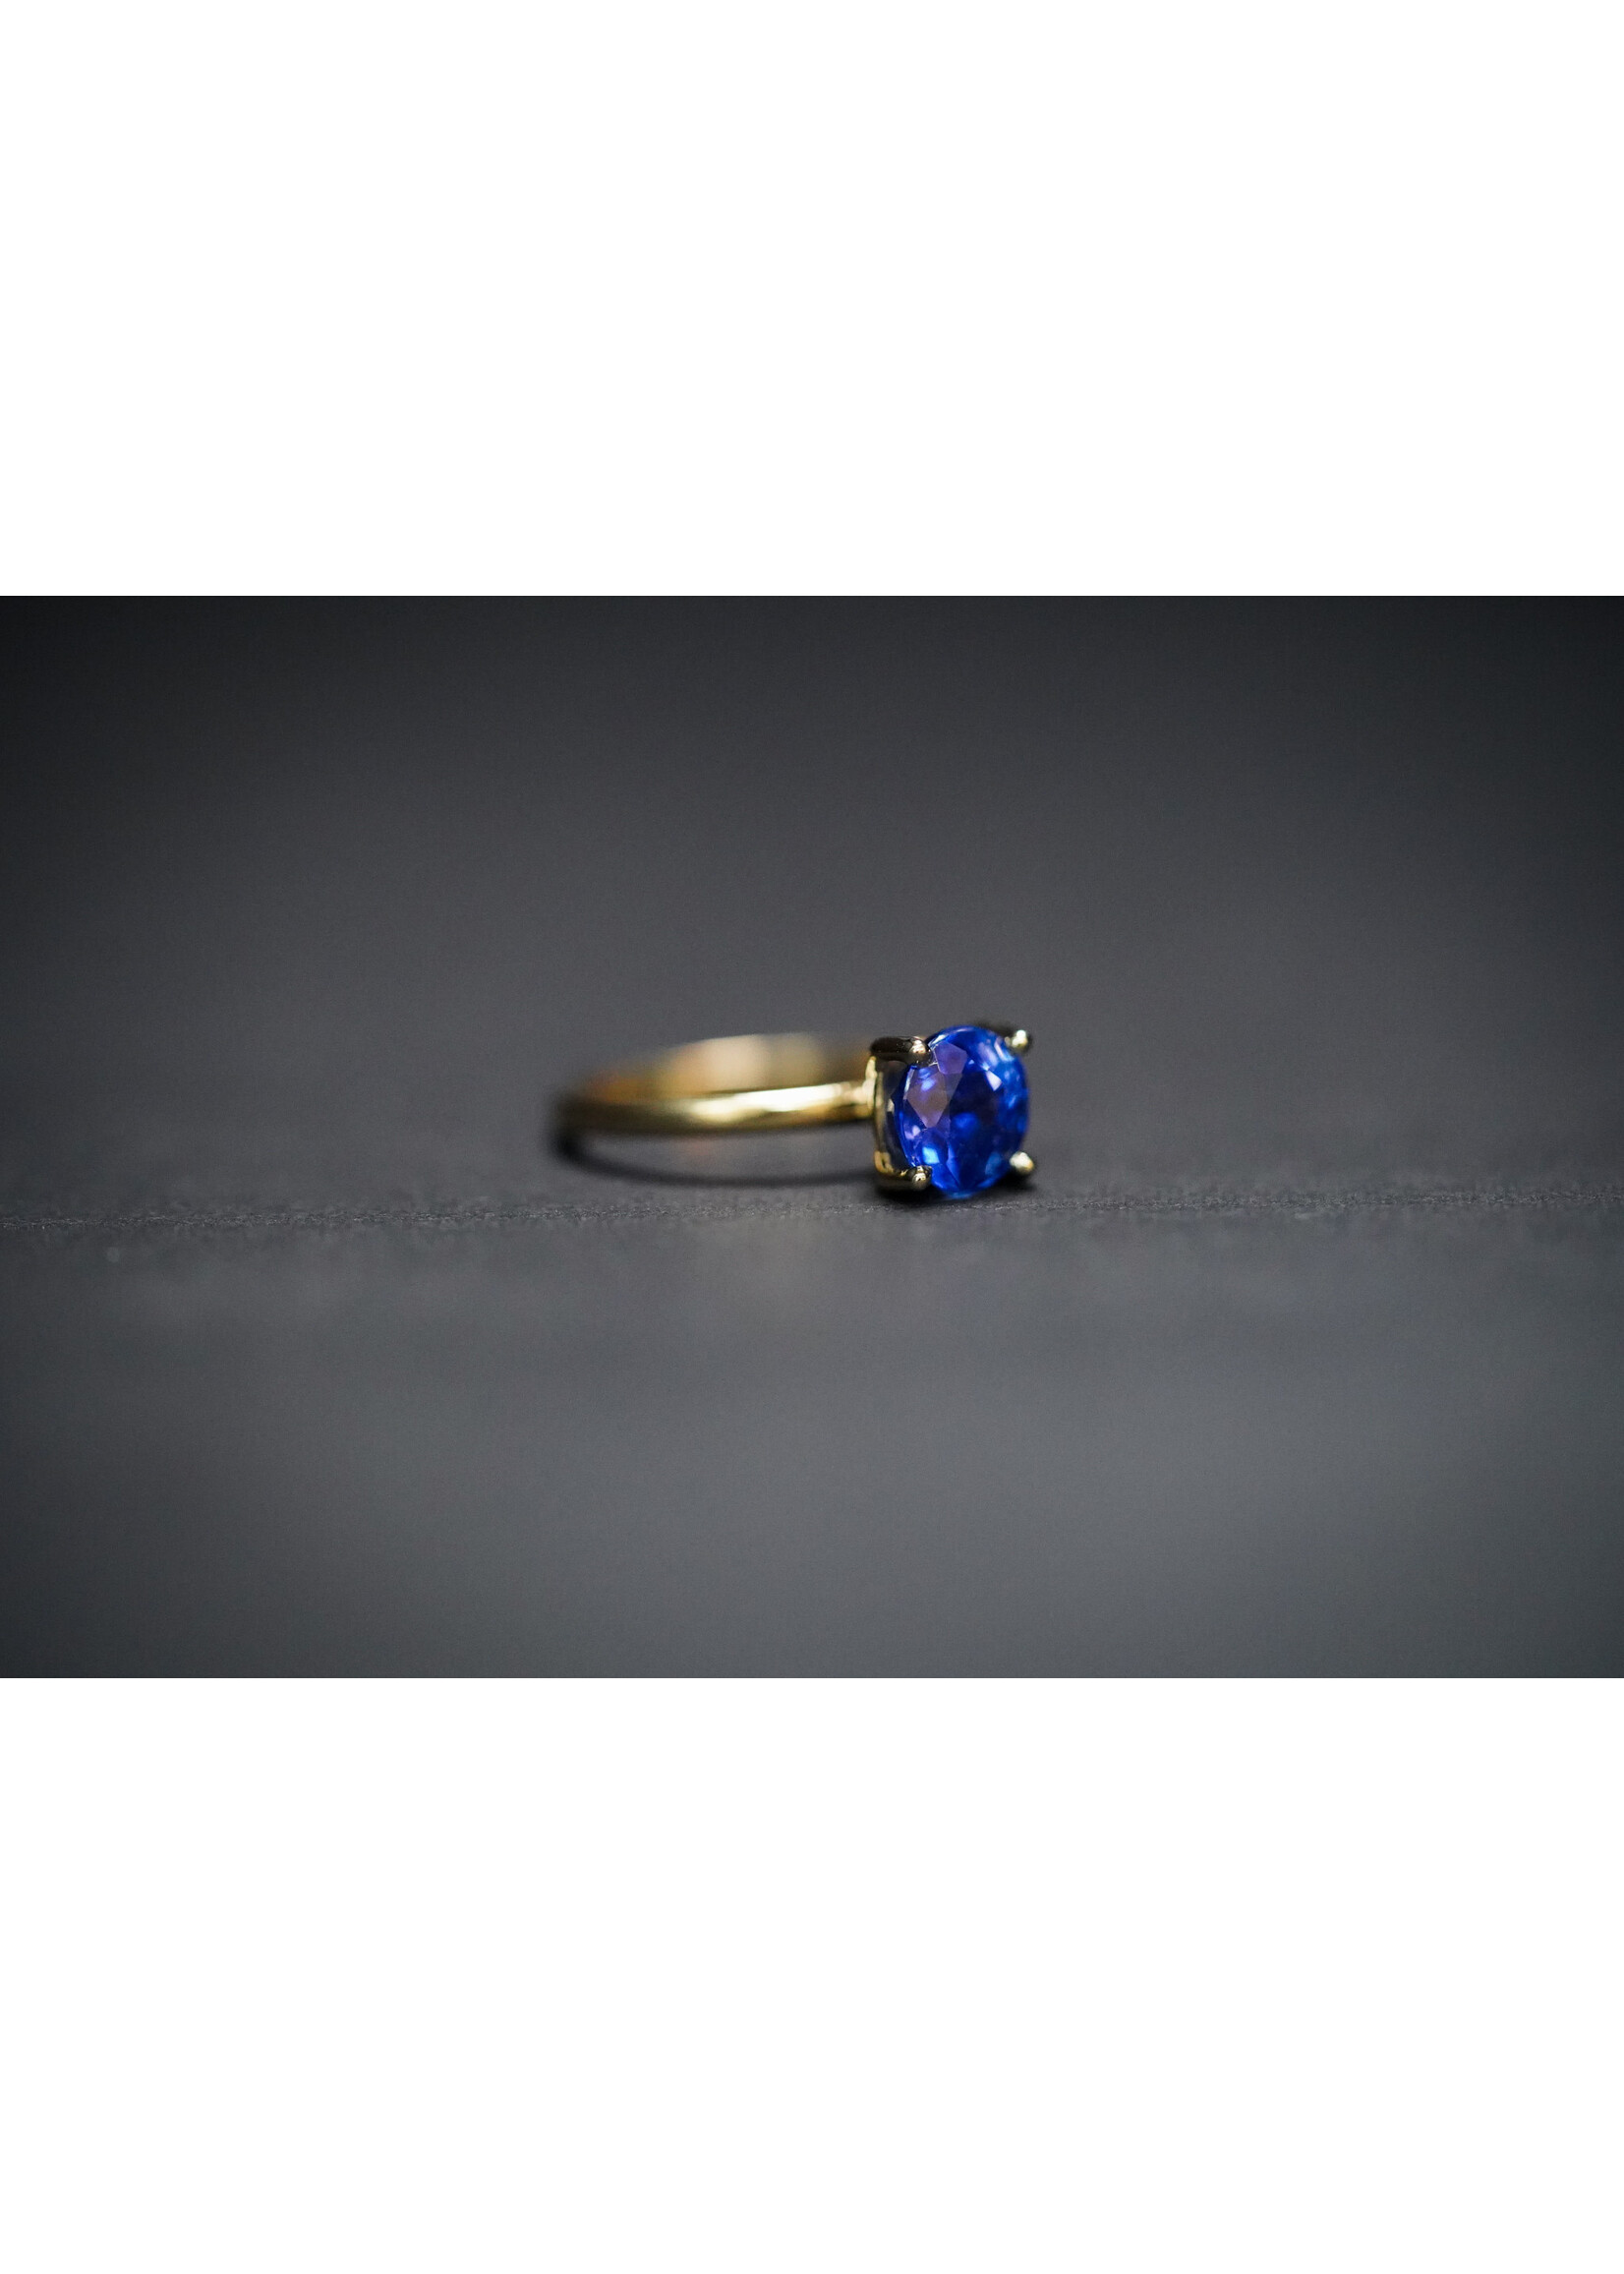 14KY 3.00g 2.68ct No Heat Burma Blue Sapphire Fashion Ring (size 7)